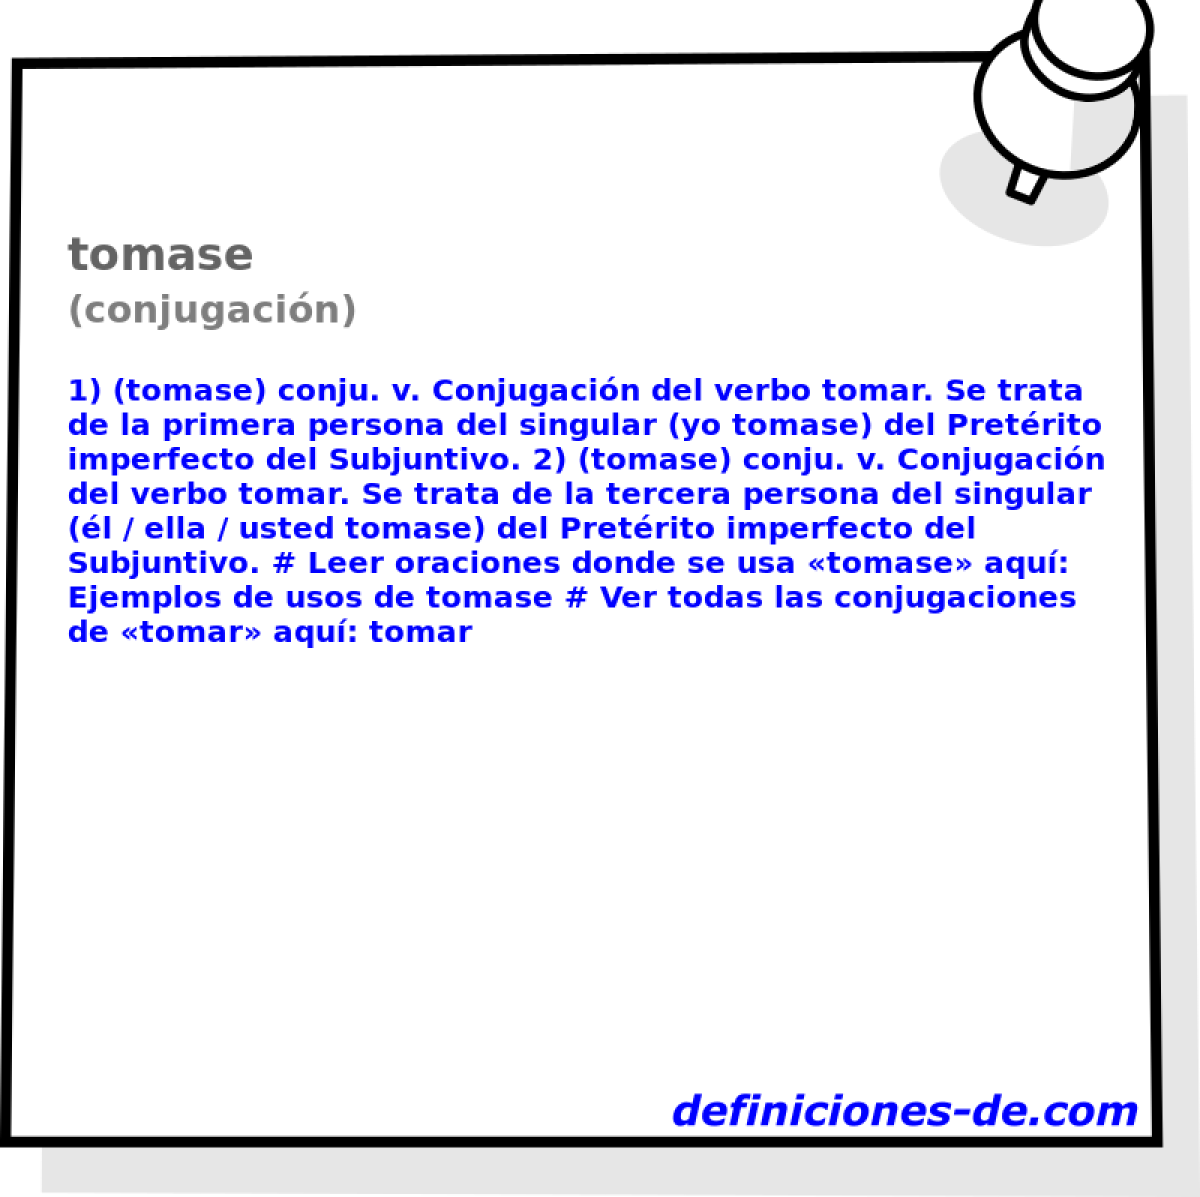 tomase (conjugacin)